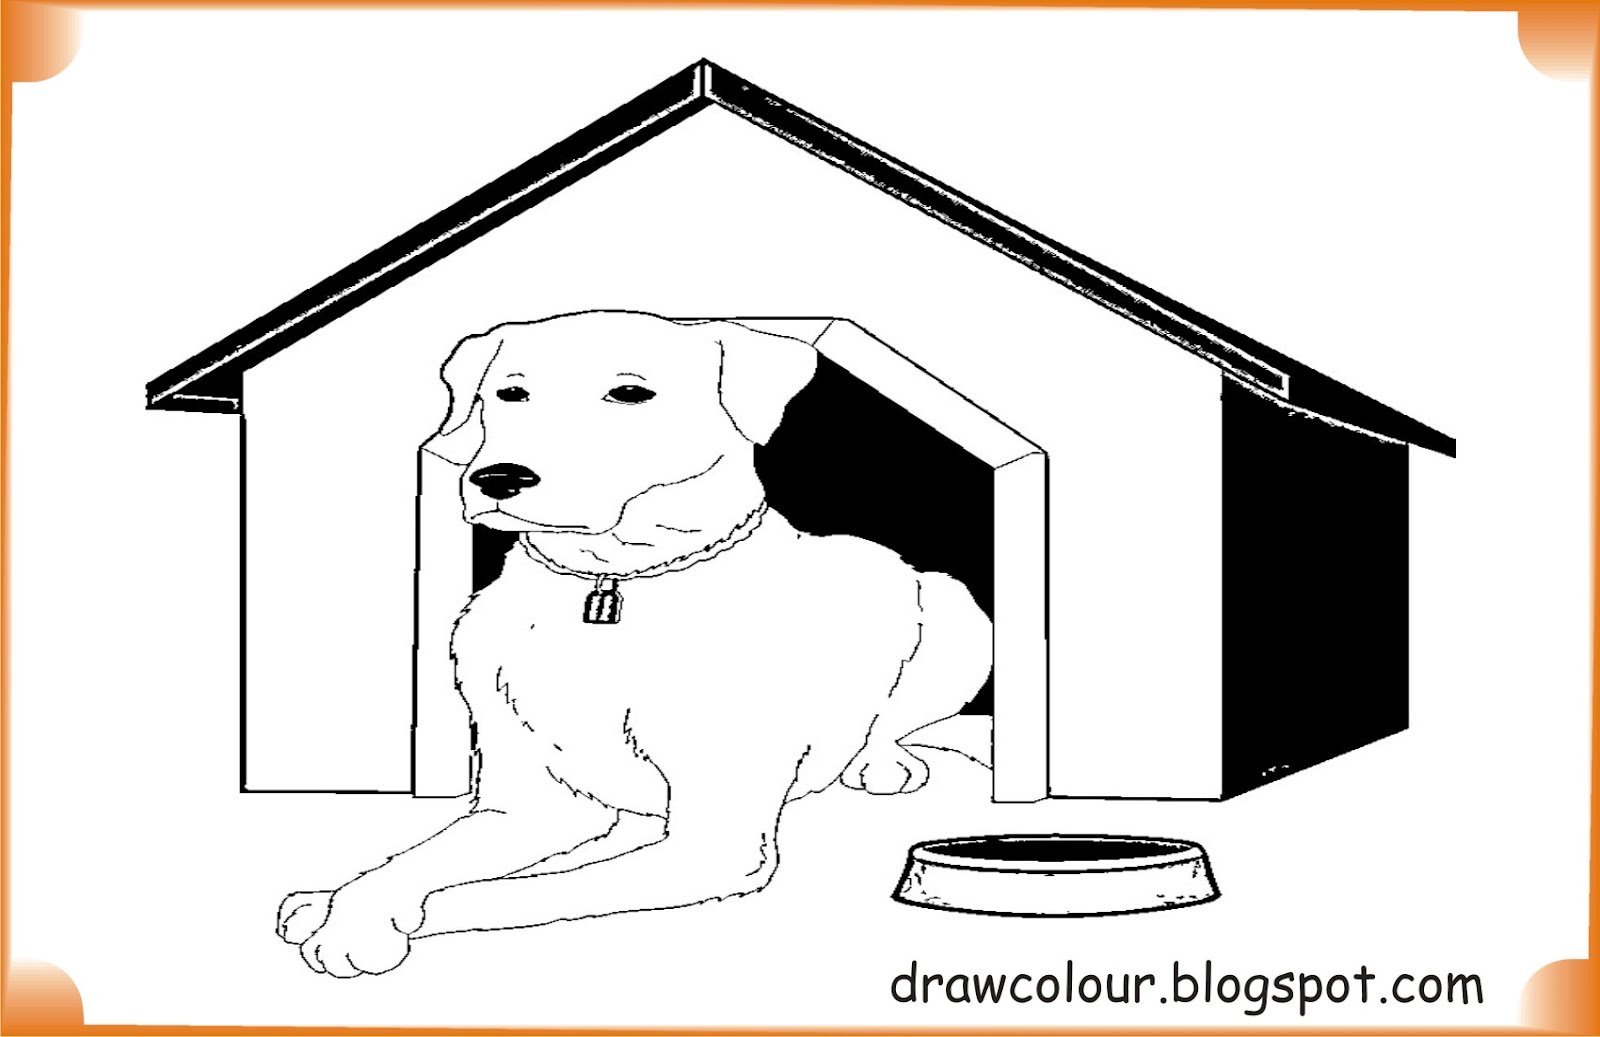 Жилище собаки картинки для детей. Dogs House Coloring. Dog in the House Clipart черно-белая. Рисунок на конкурс хвостик дог Хаус для детей. Игра dog house dogs house net